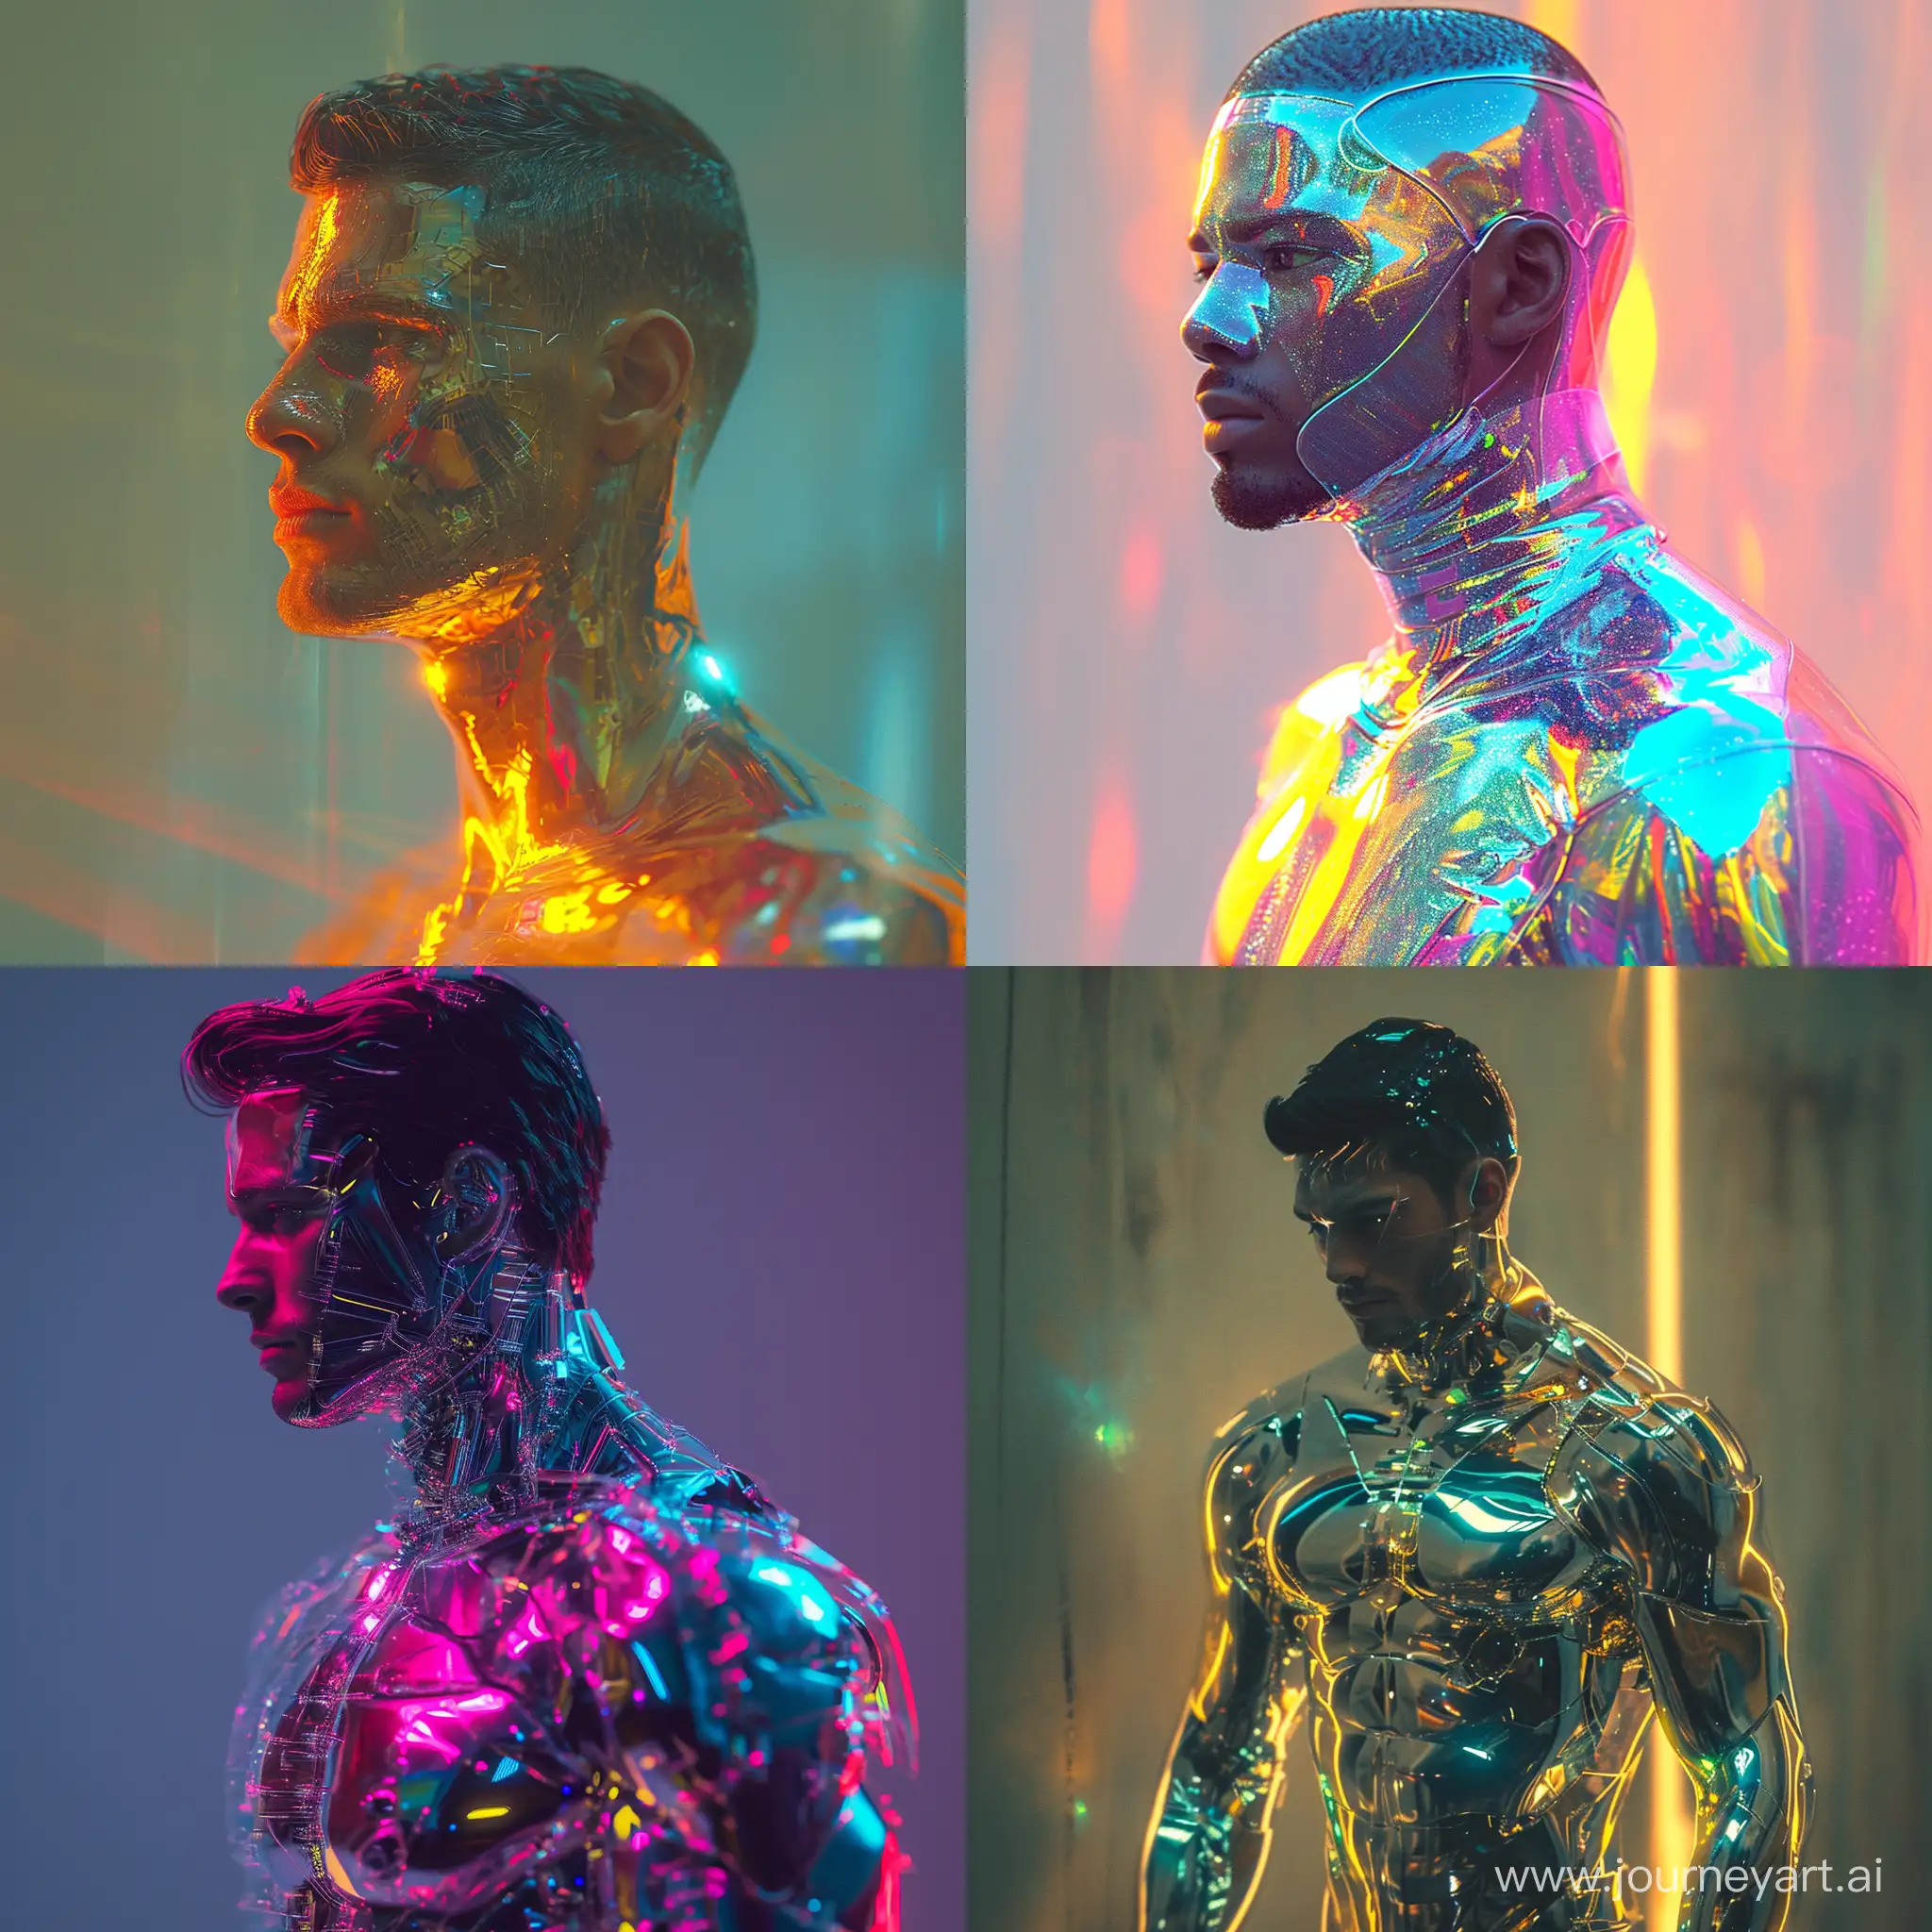 Futuristic-Holographic-Man-with-Acid-Design-and-Vintage-Aesthetics